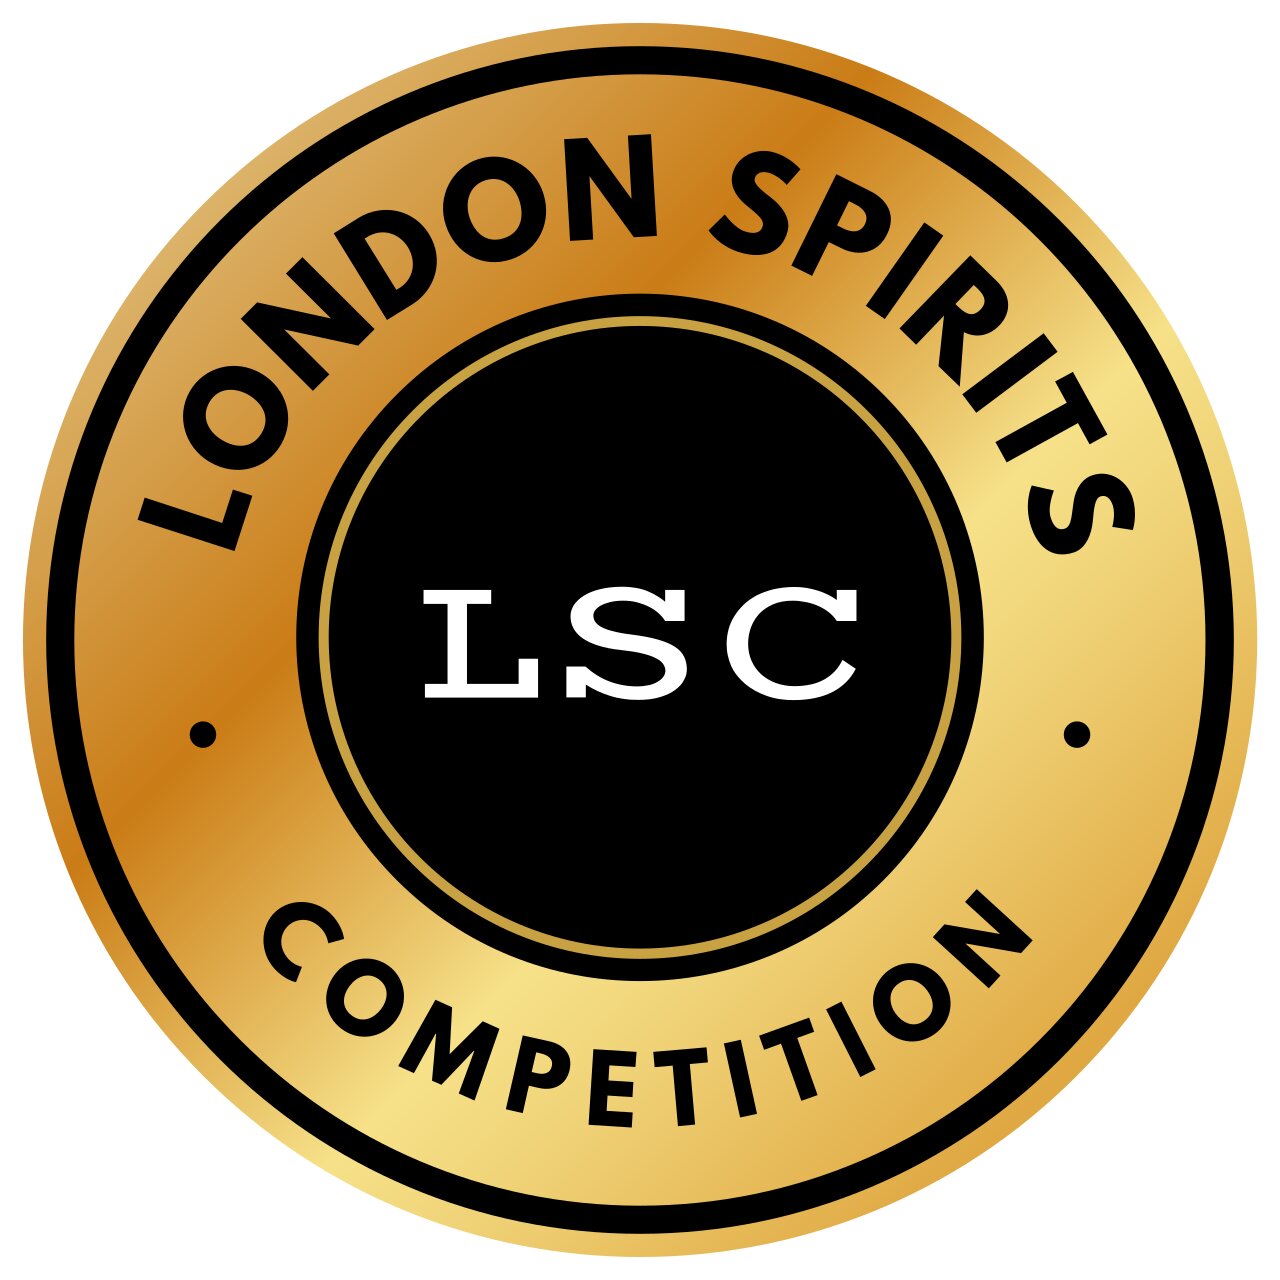 London Spirits Competition Logo